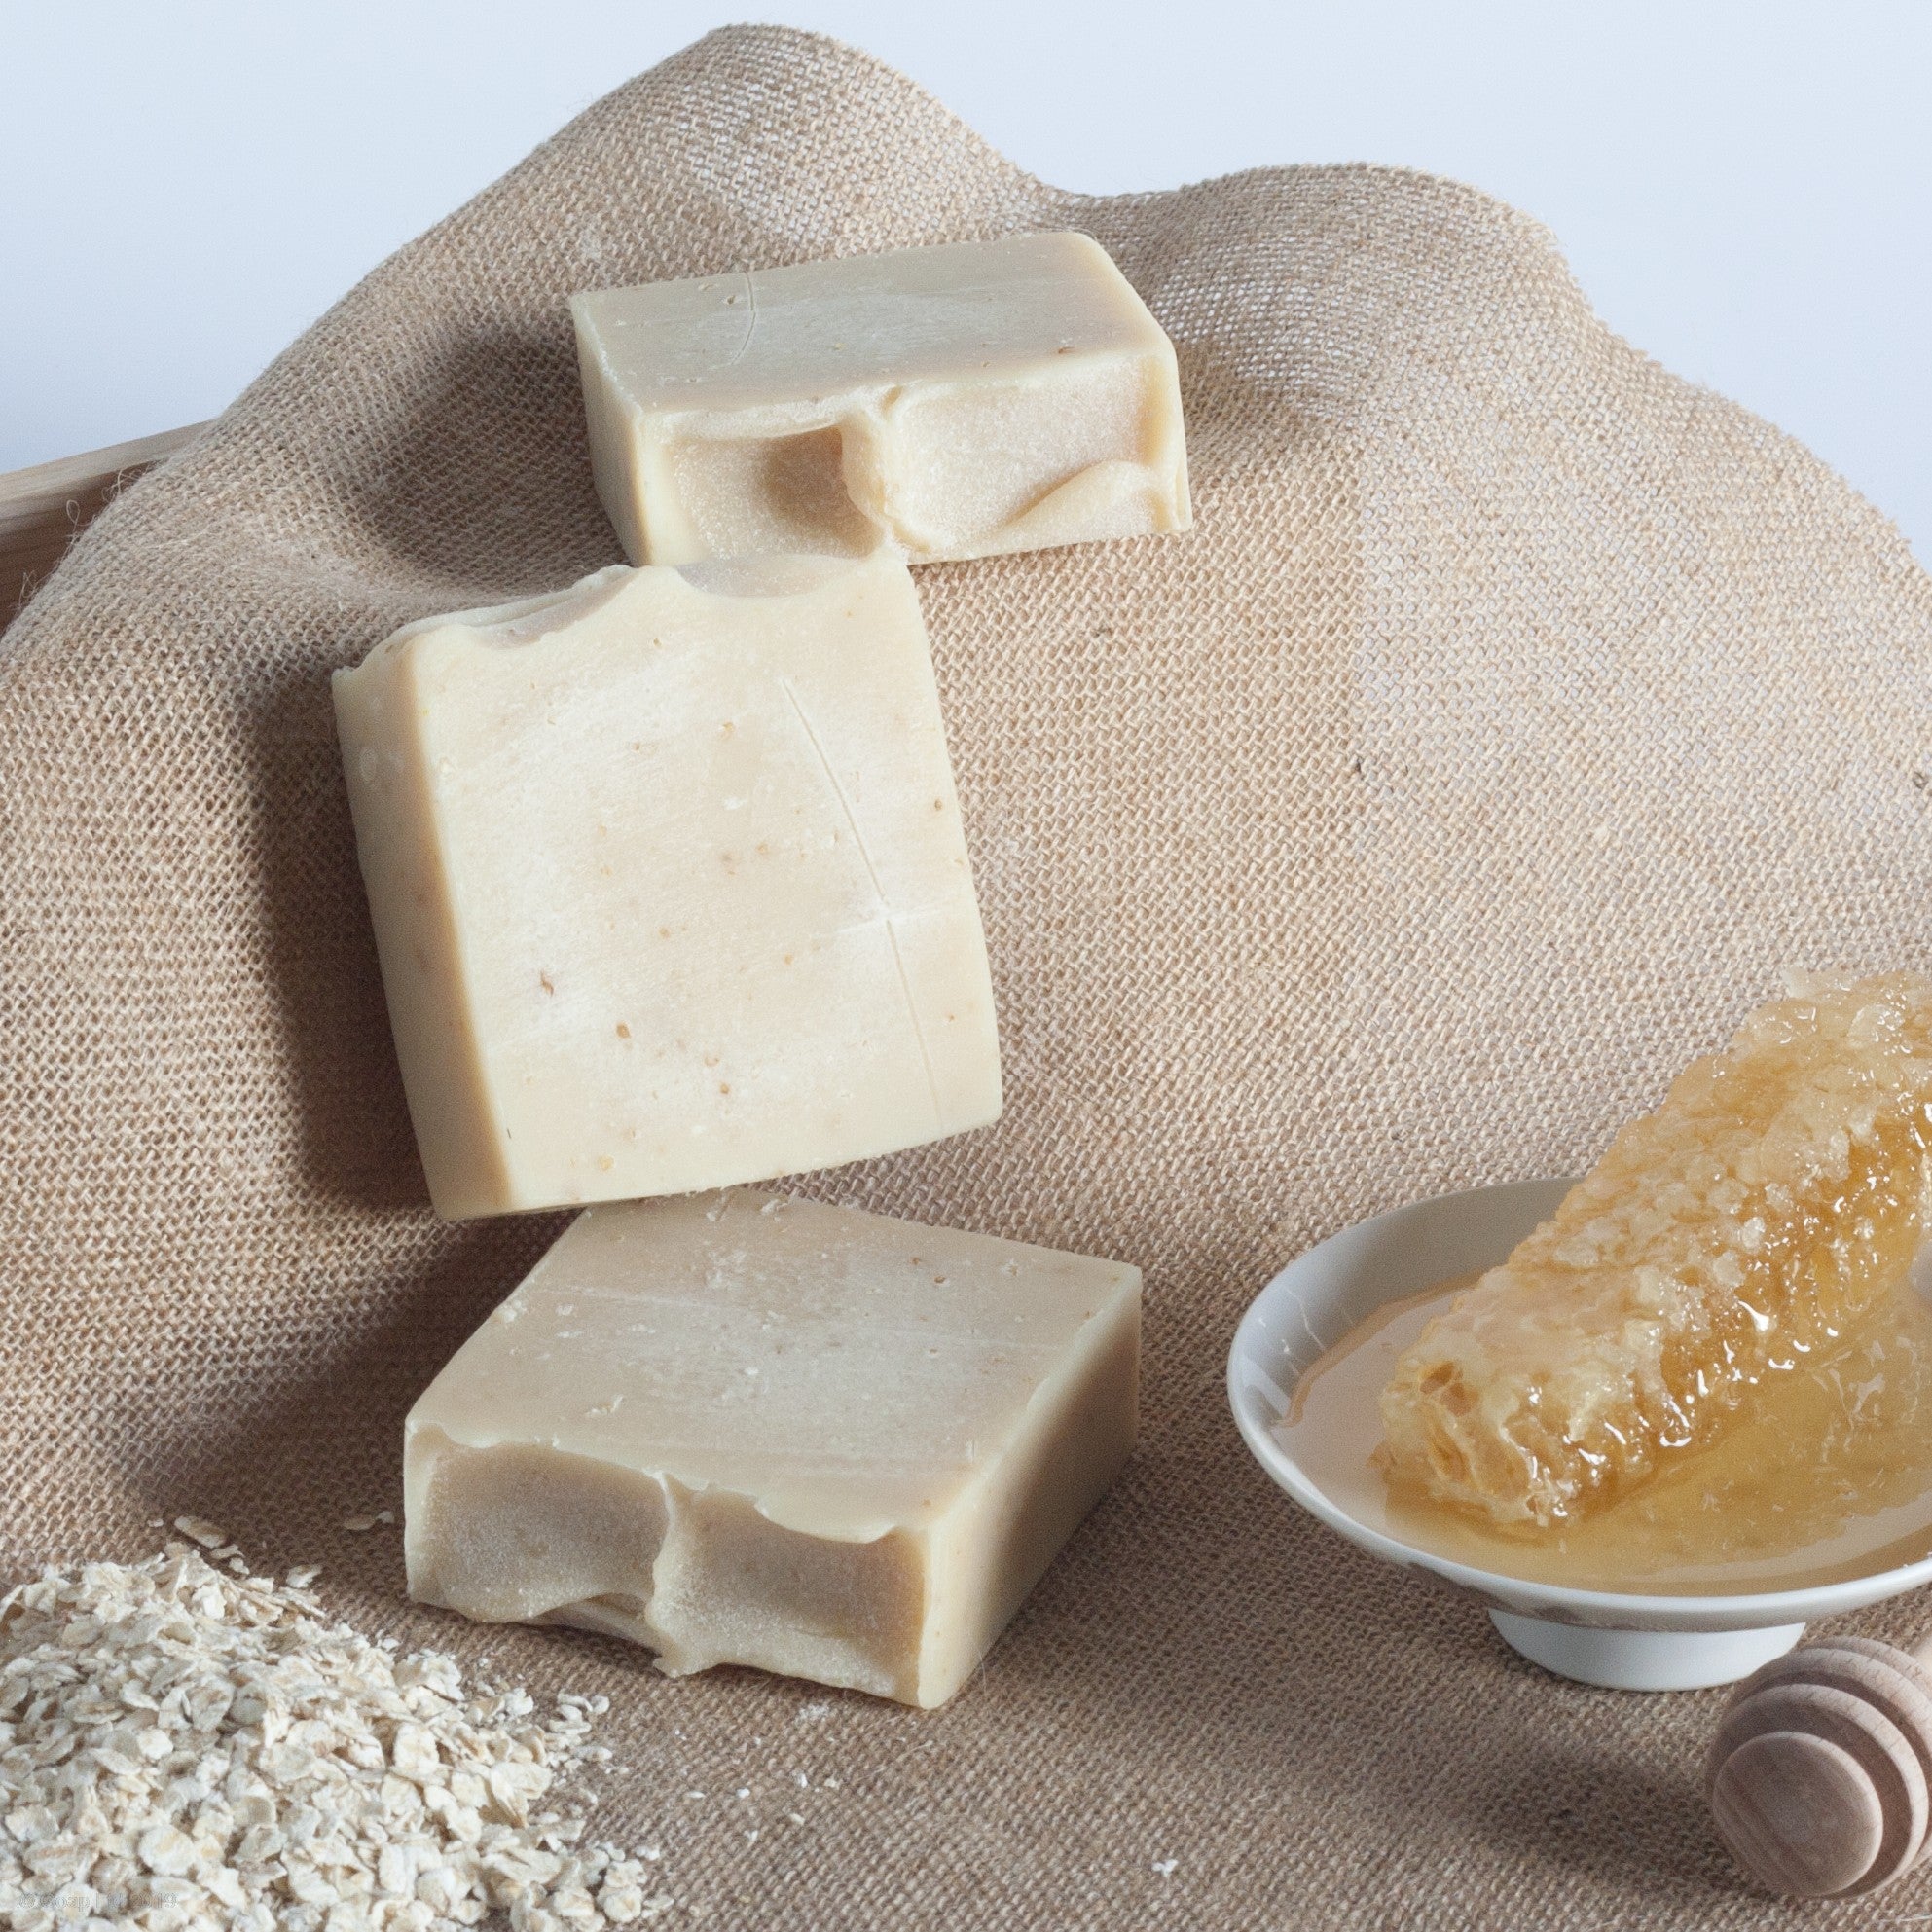 Oatmeal & Honey soap from Goap 